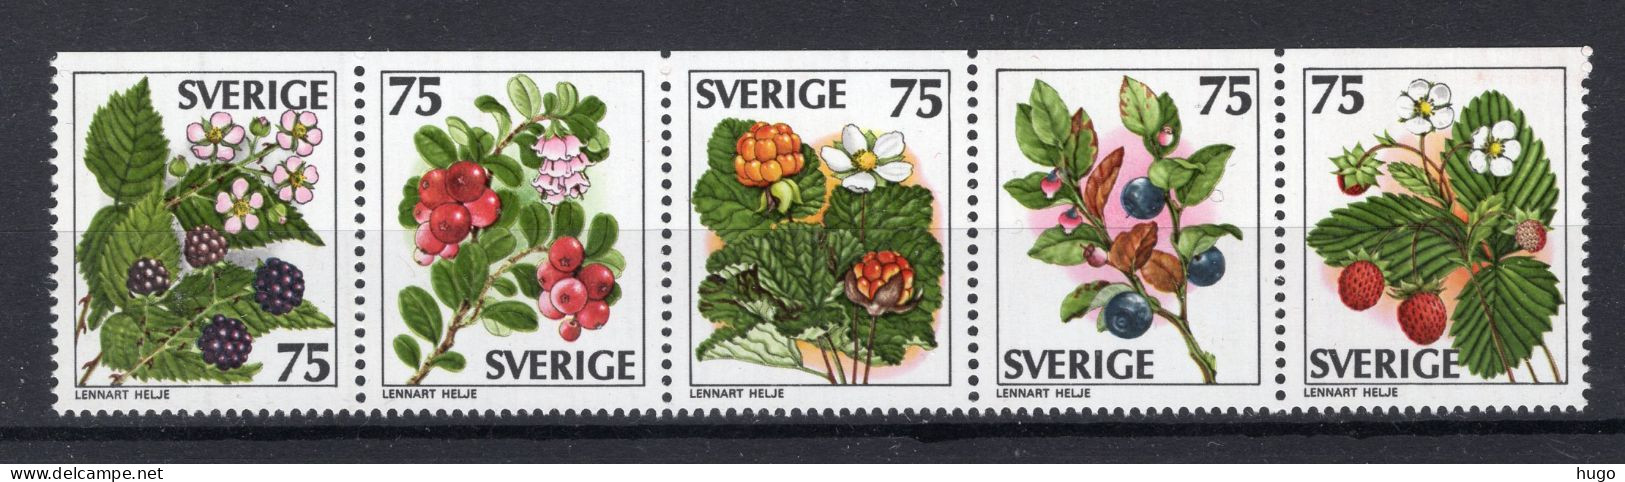 ZWEDEN Yvert 975/979 MNH 1977 - Unused Stamps